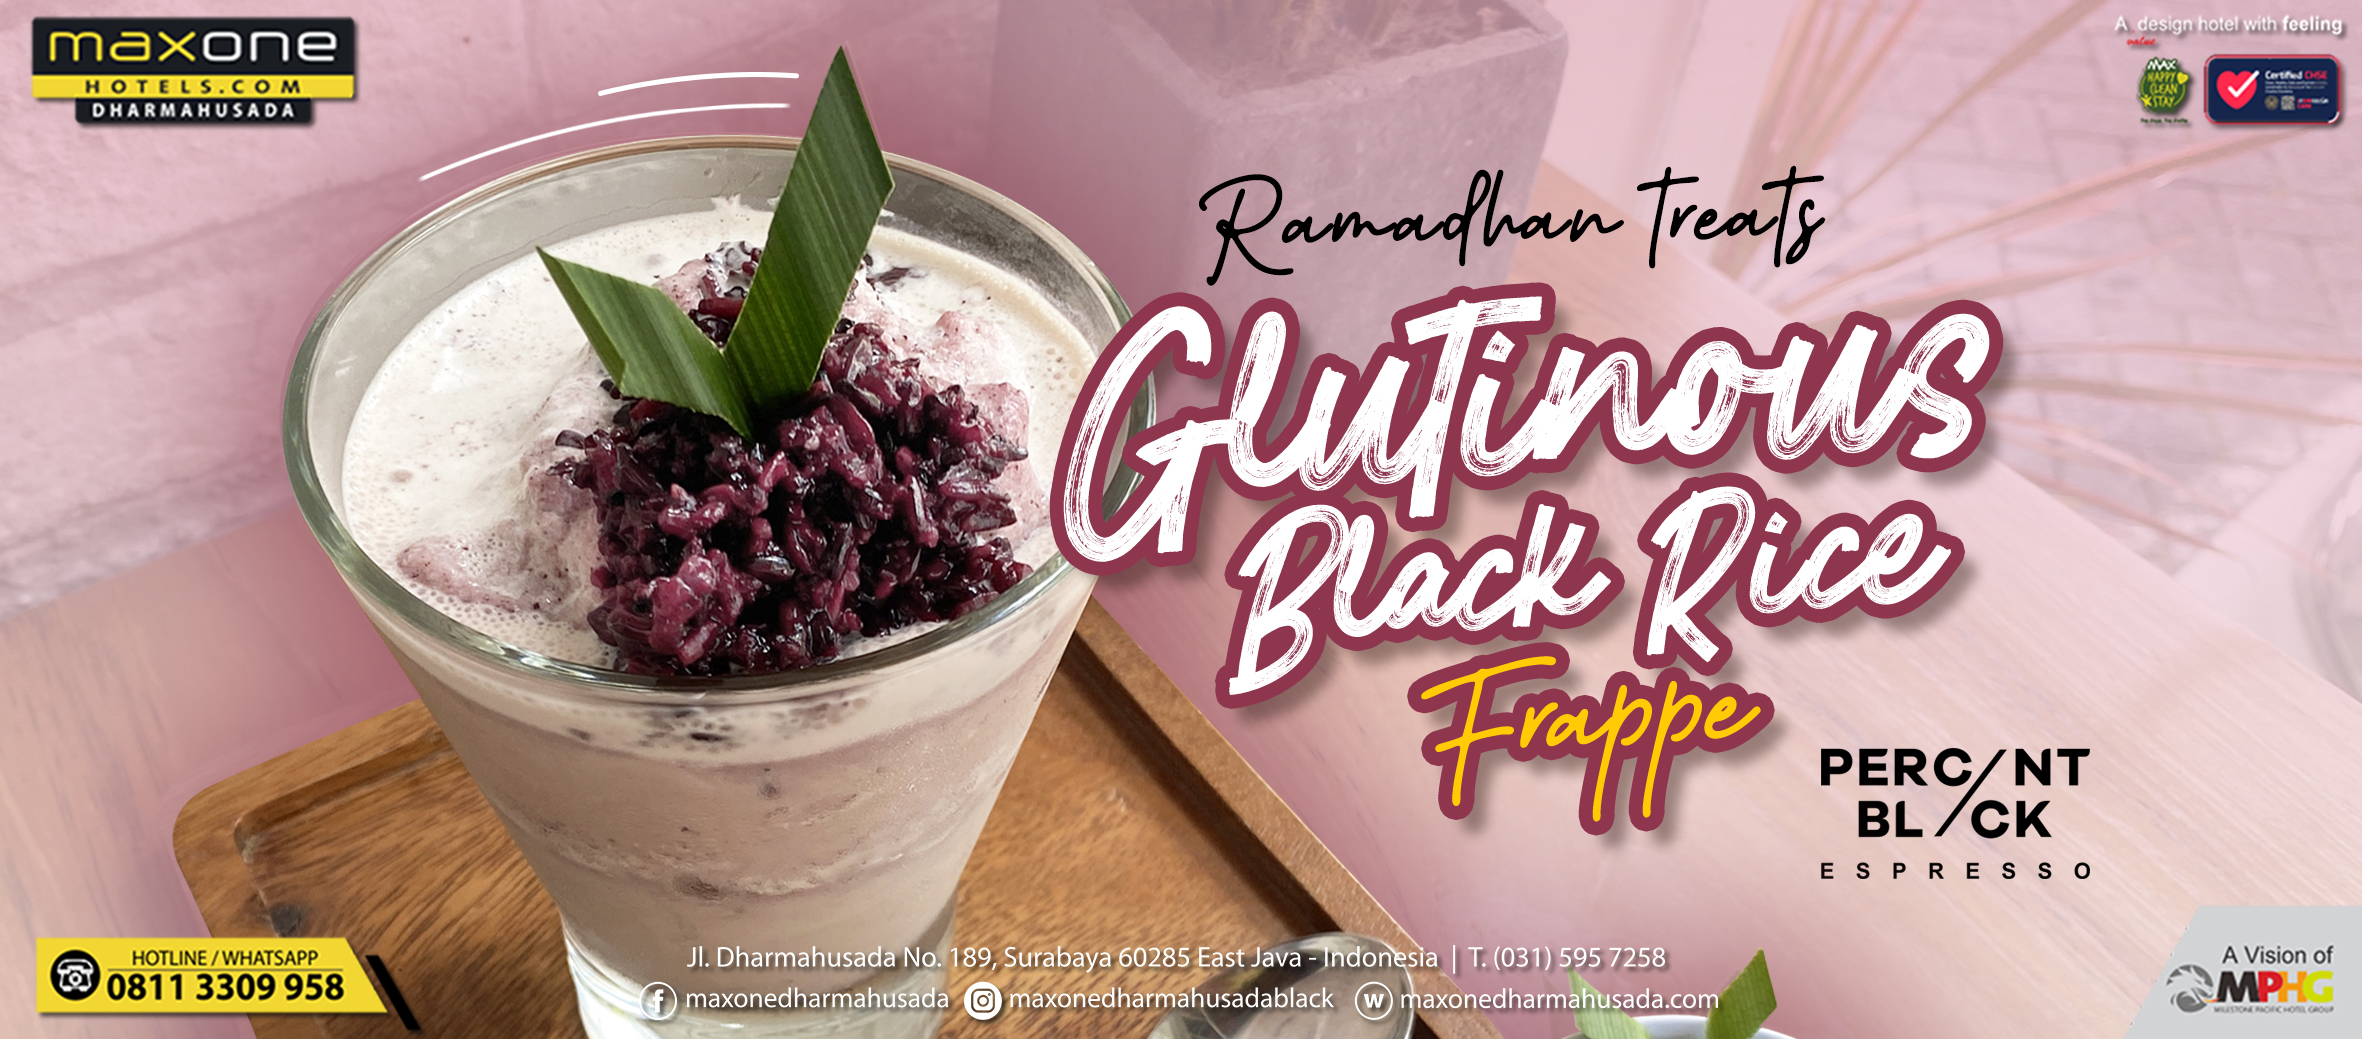 Glutinous Black Rice frappe